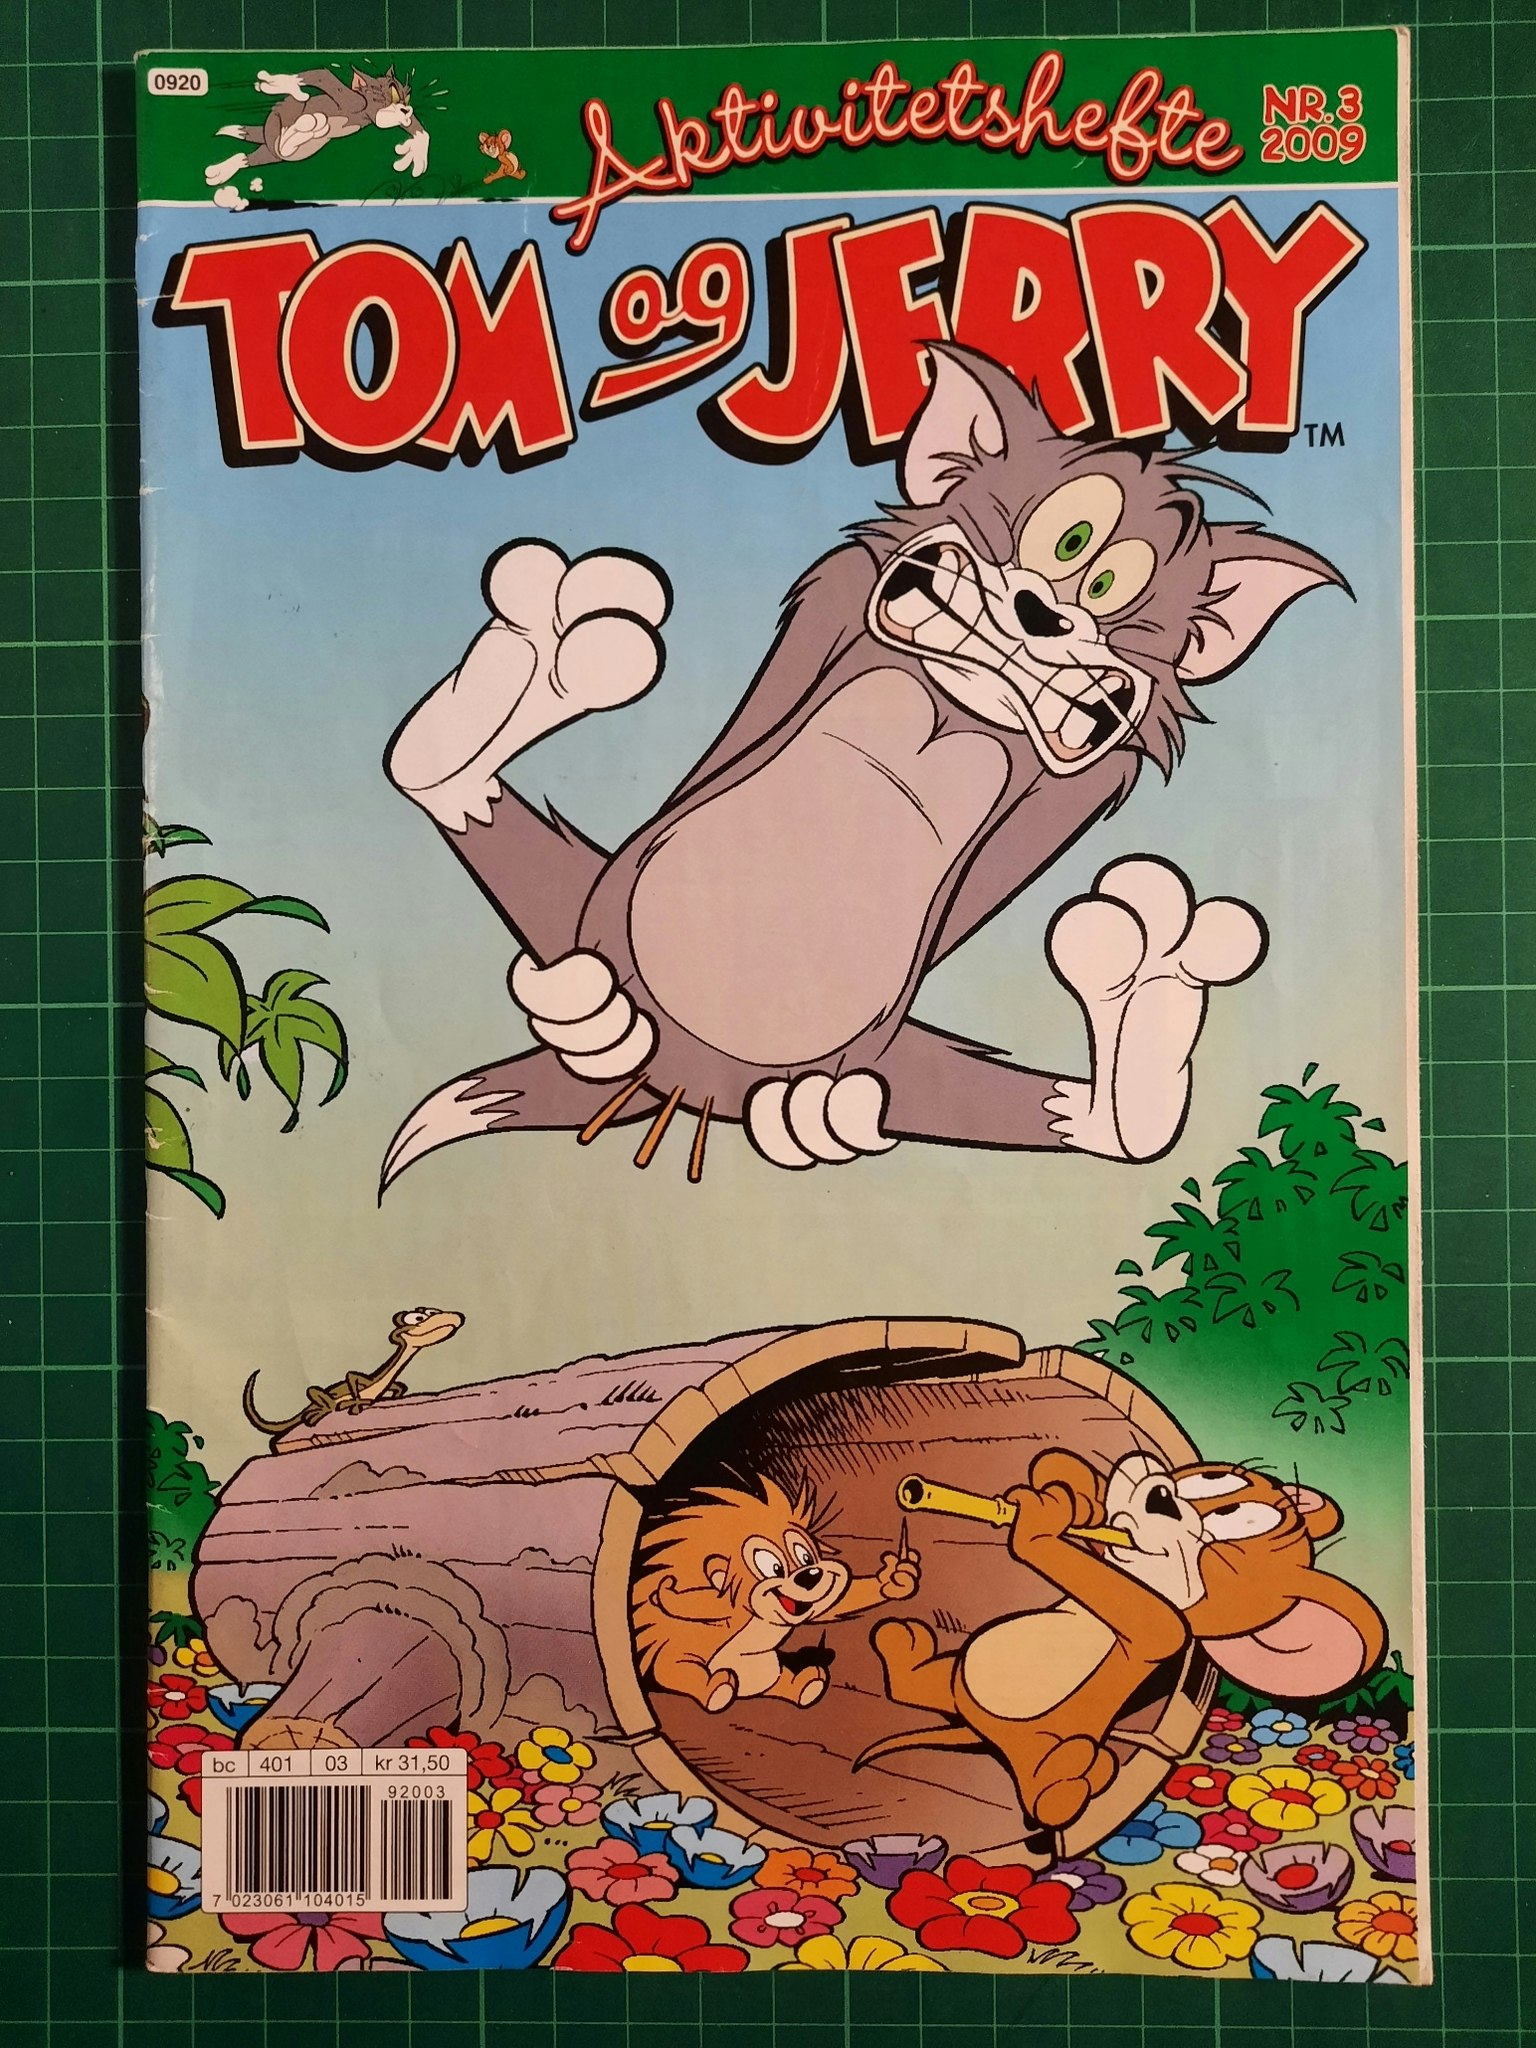 Tom og Jerry 2009 - 03